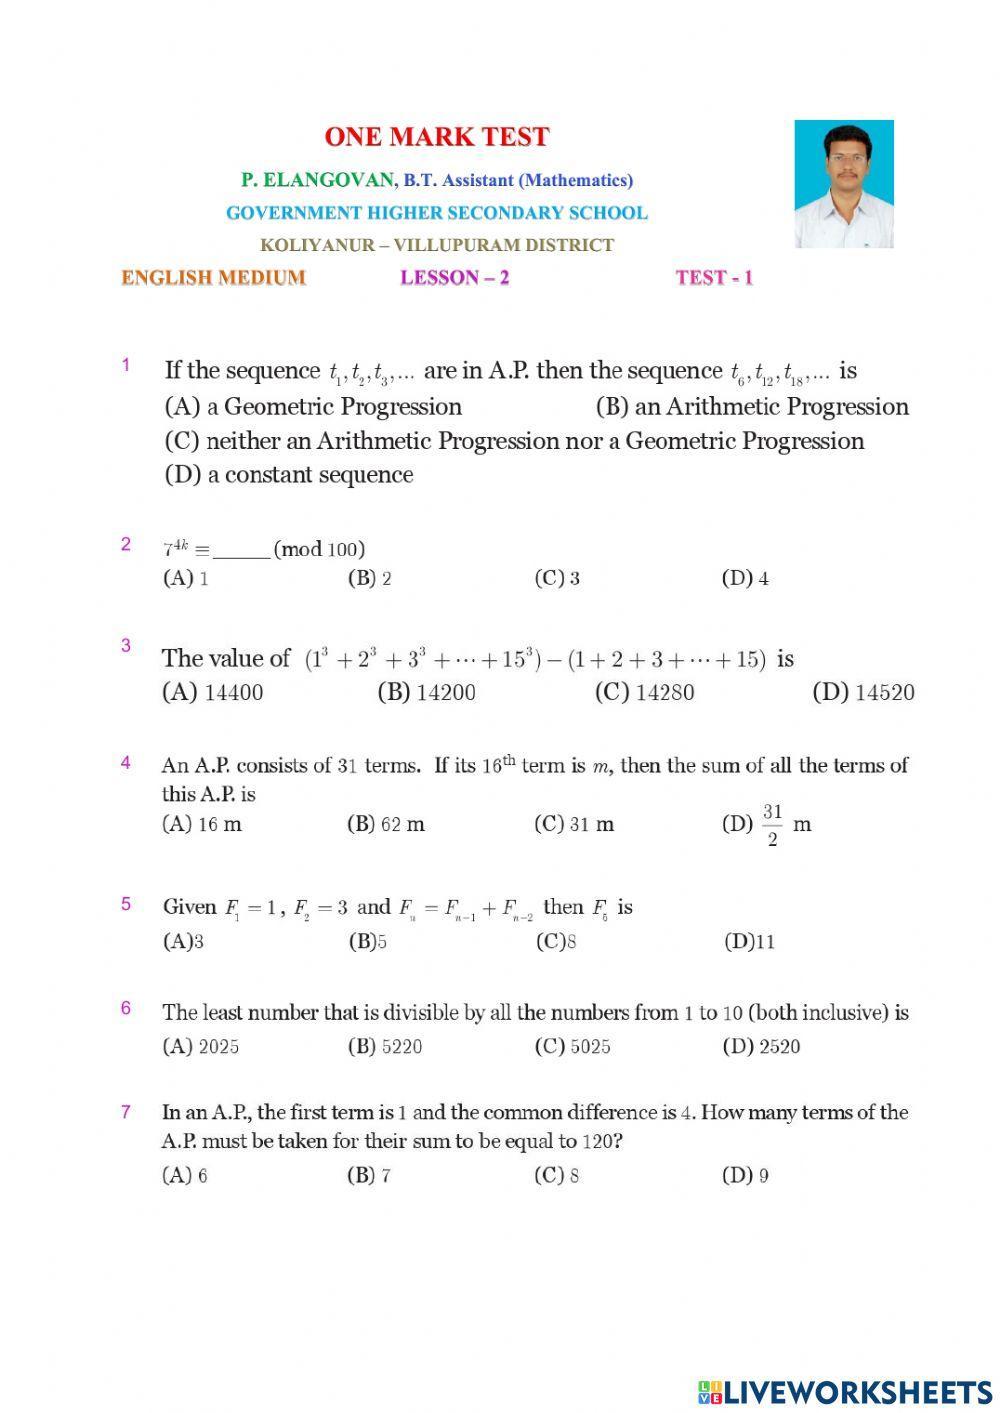 Class 10 Maths English Medium Lesson2 Test 1